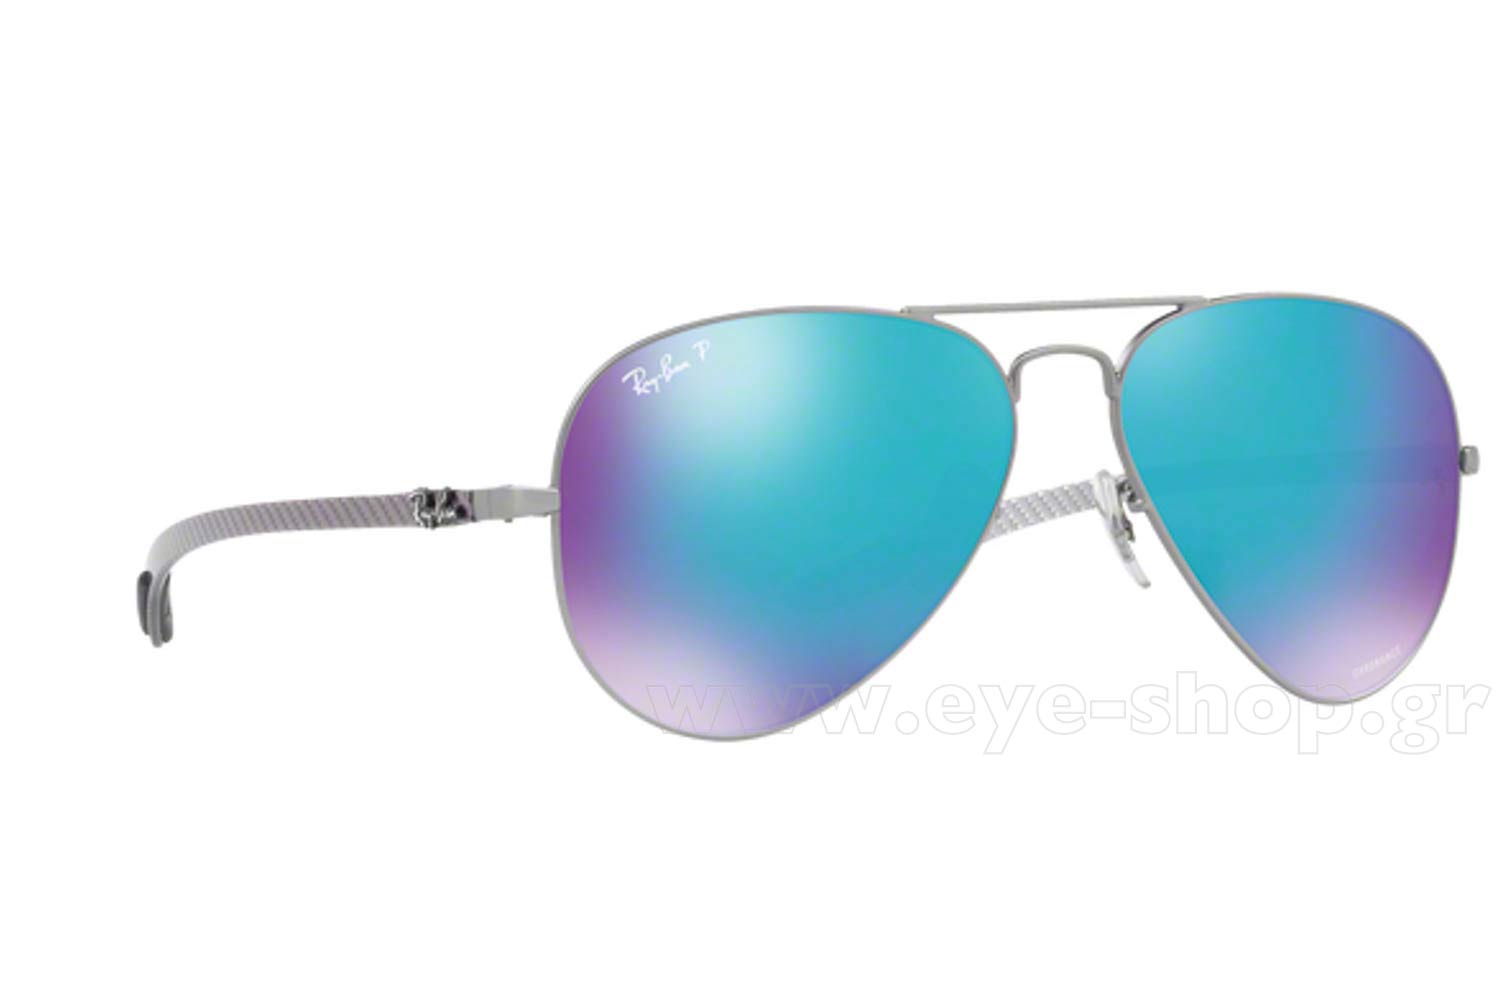 Rayban 17ch 029 A1 Polarized 58 Sunglasses Men Eyeshop